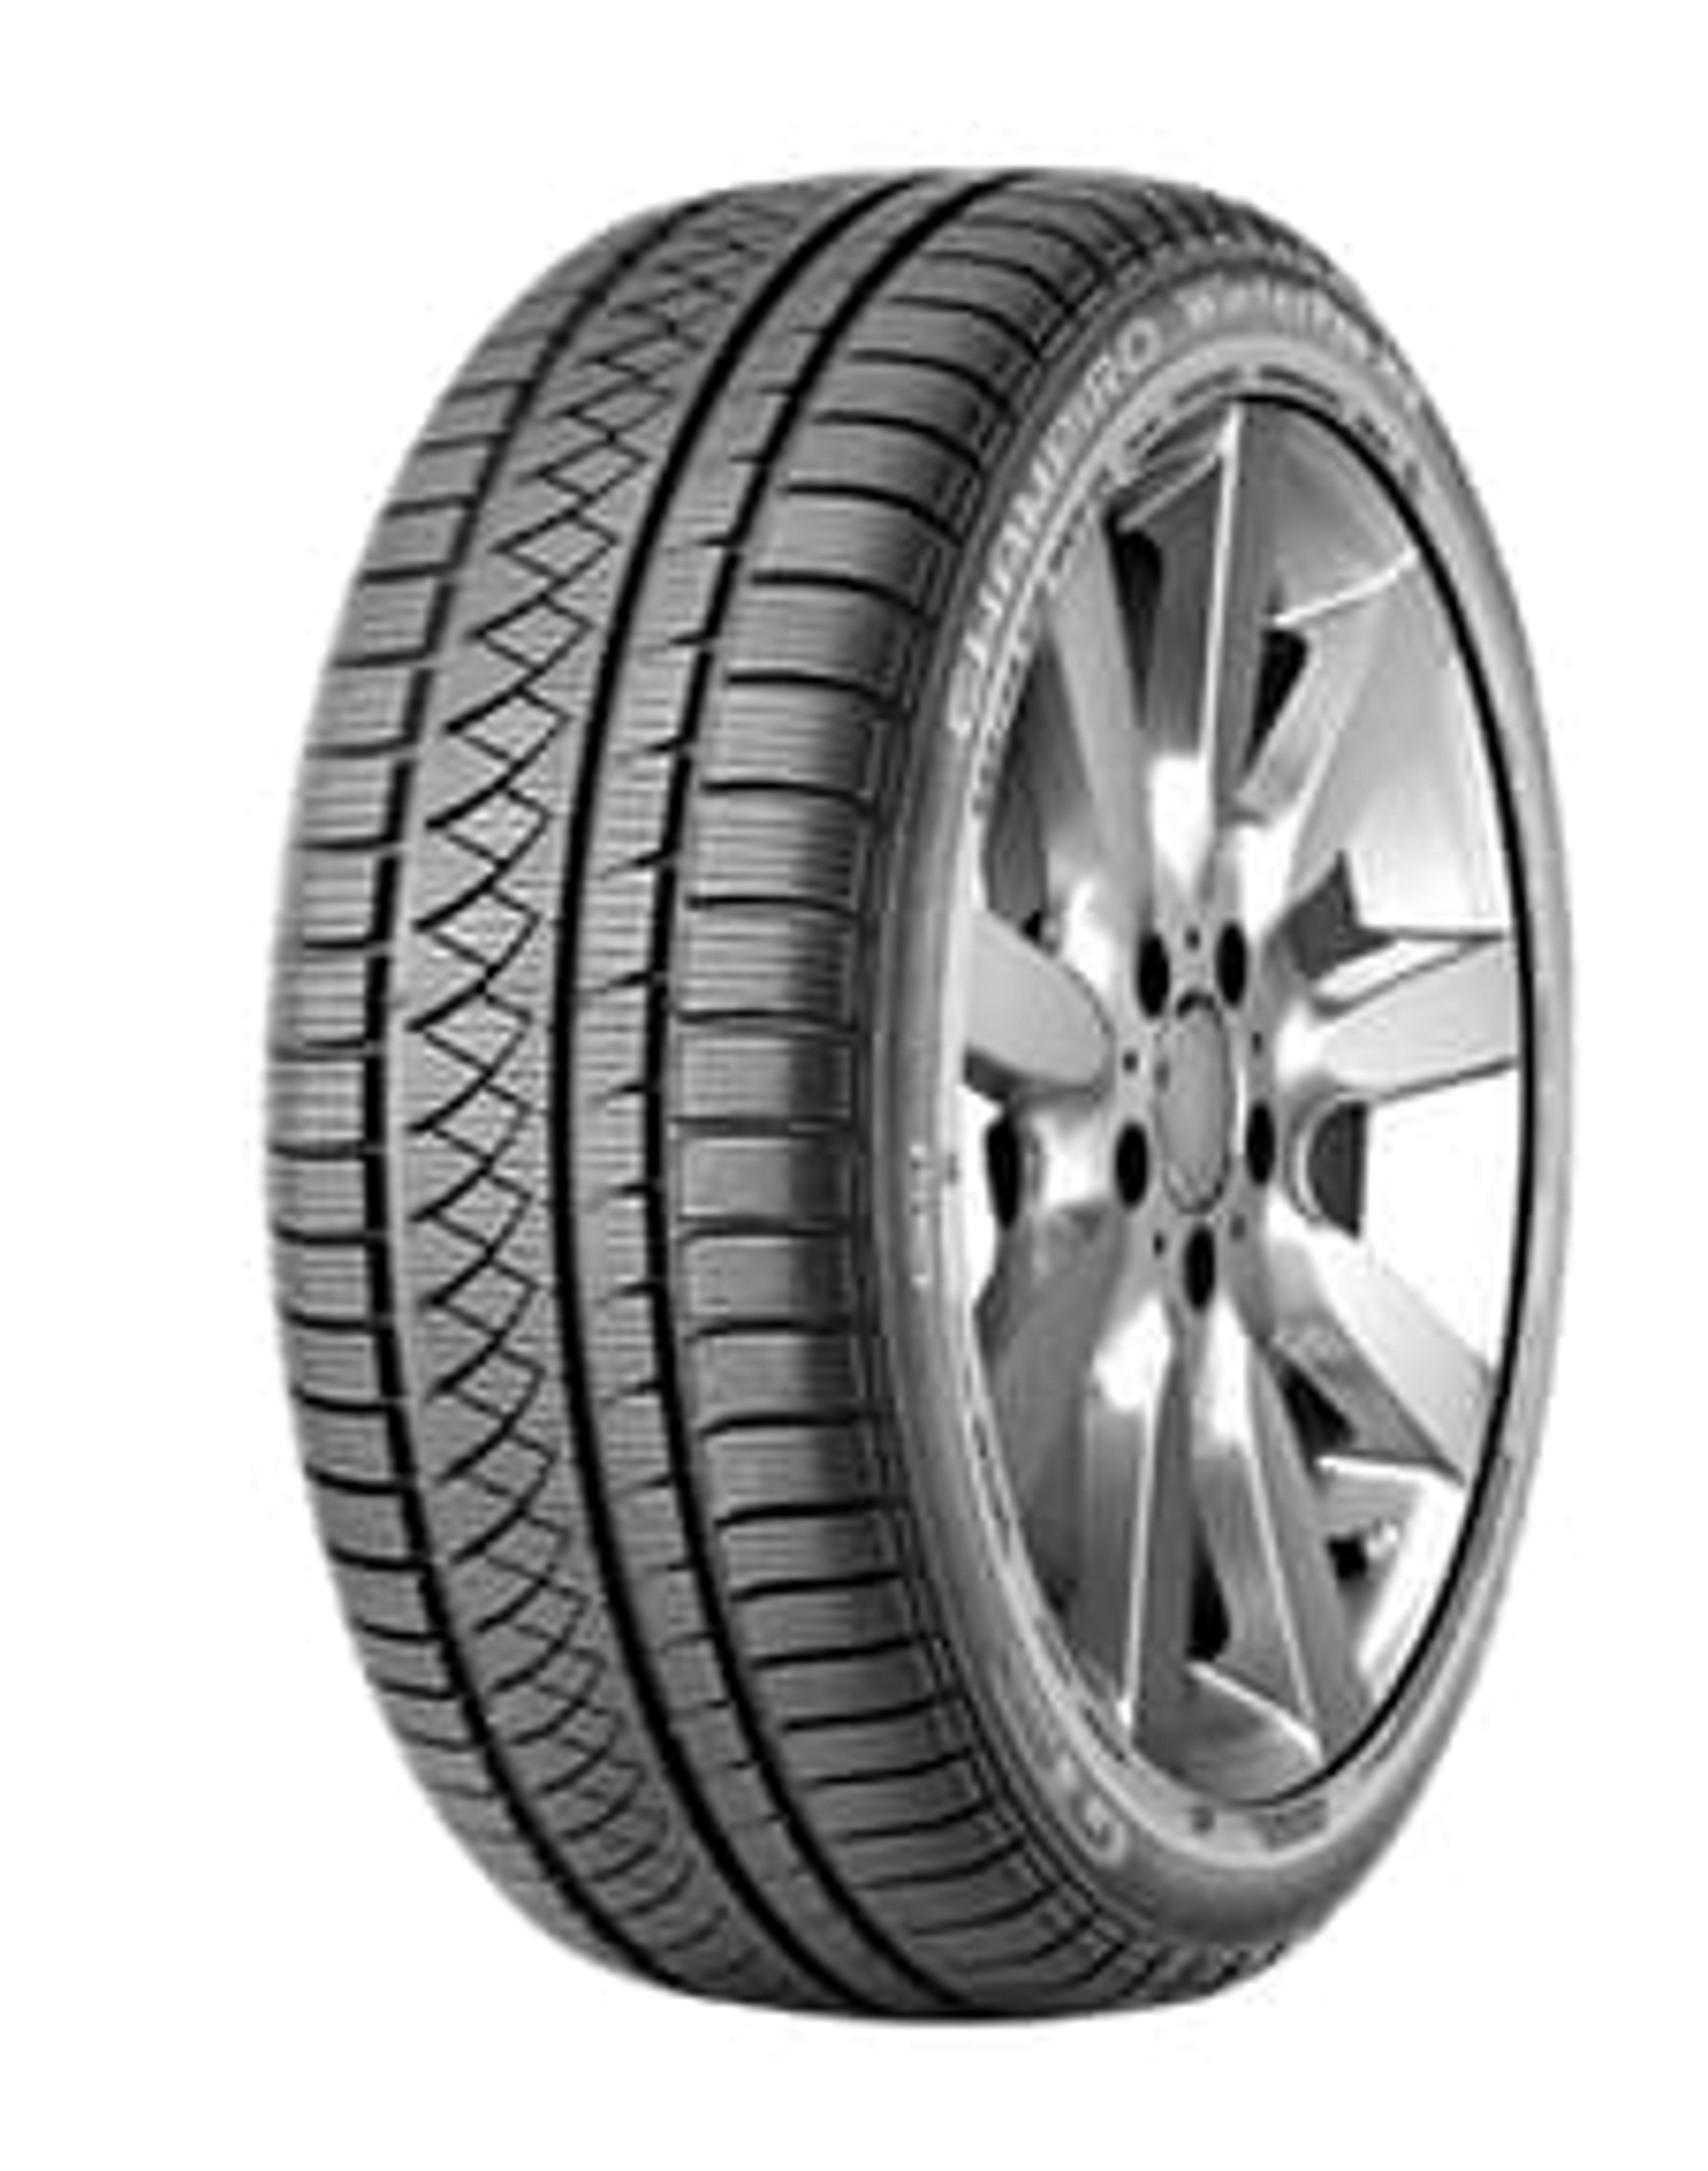 | SimpleTire Champiro Buy Tires Online Winterpro Radial HP GT